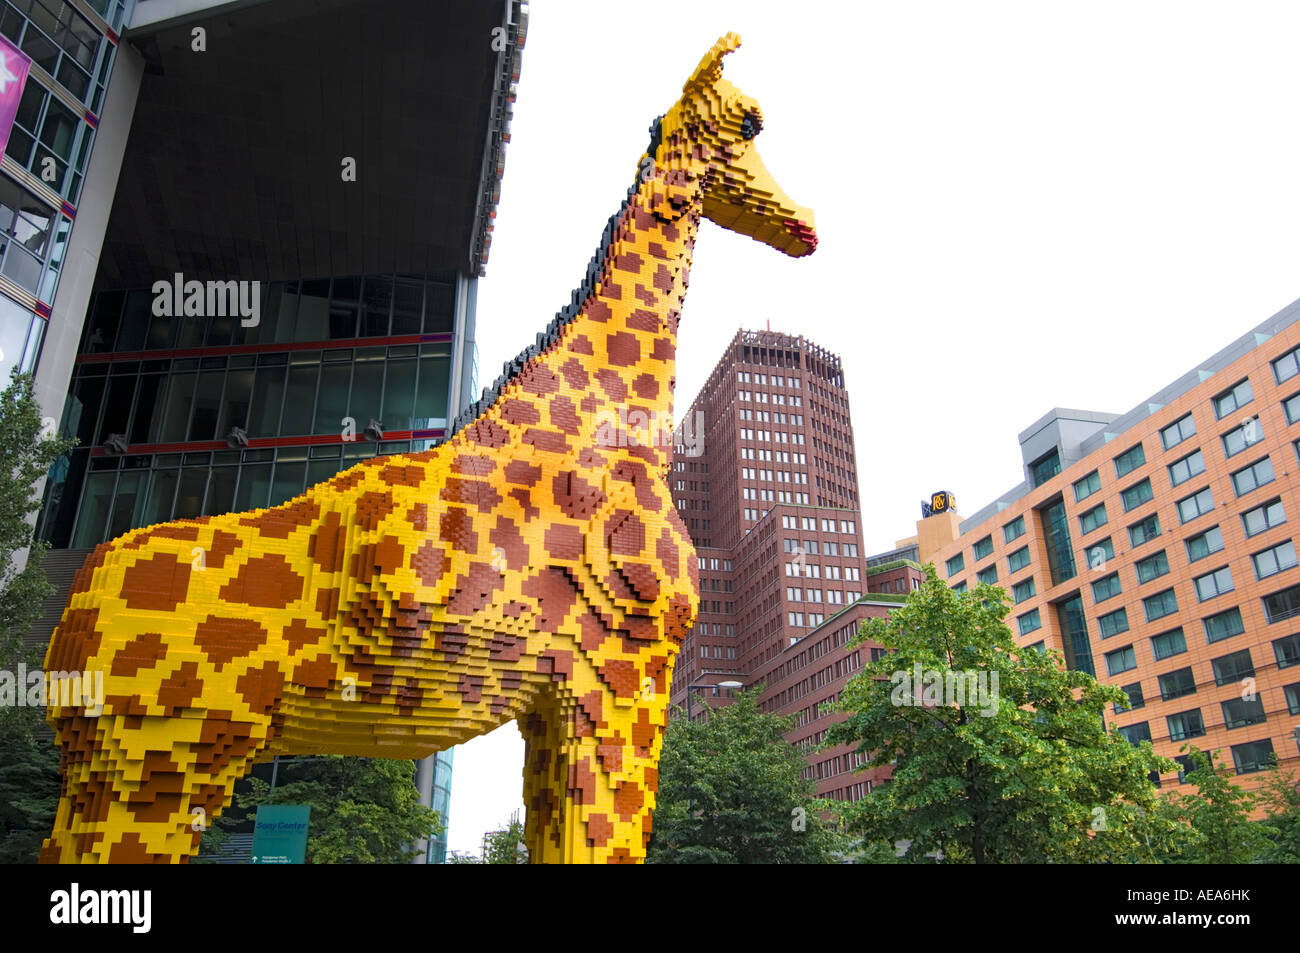 large figure TOY Giraffe made of lego brick ahead of SONY CENTER BERLIN Stock Photo